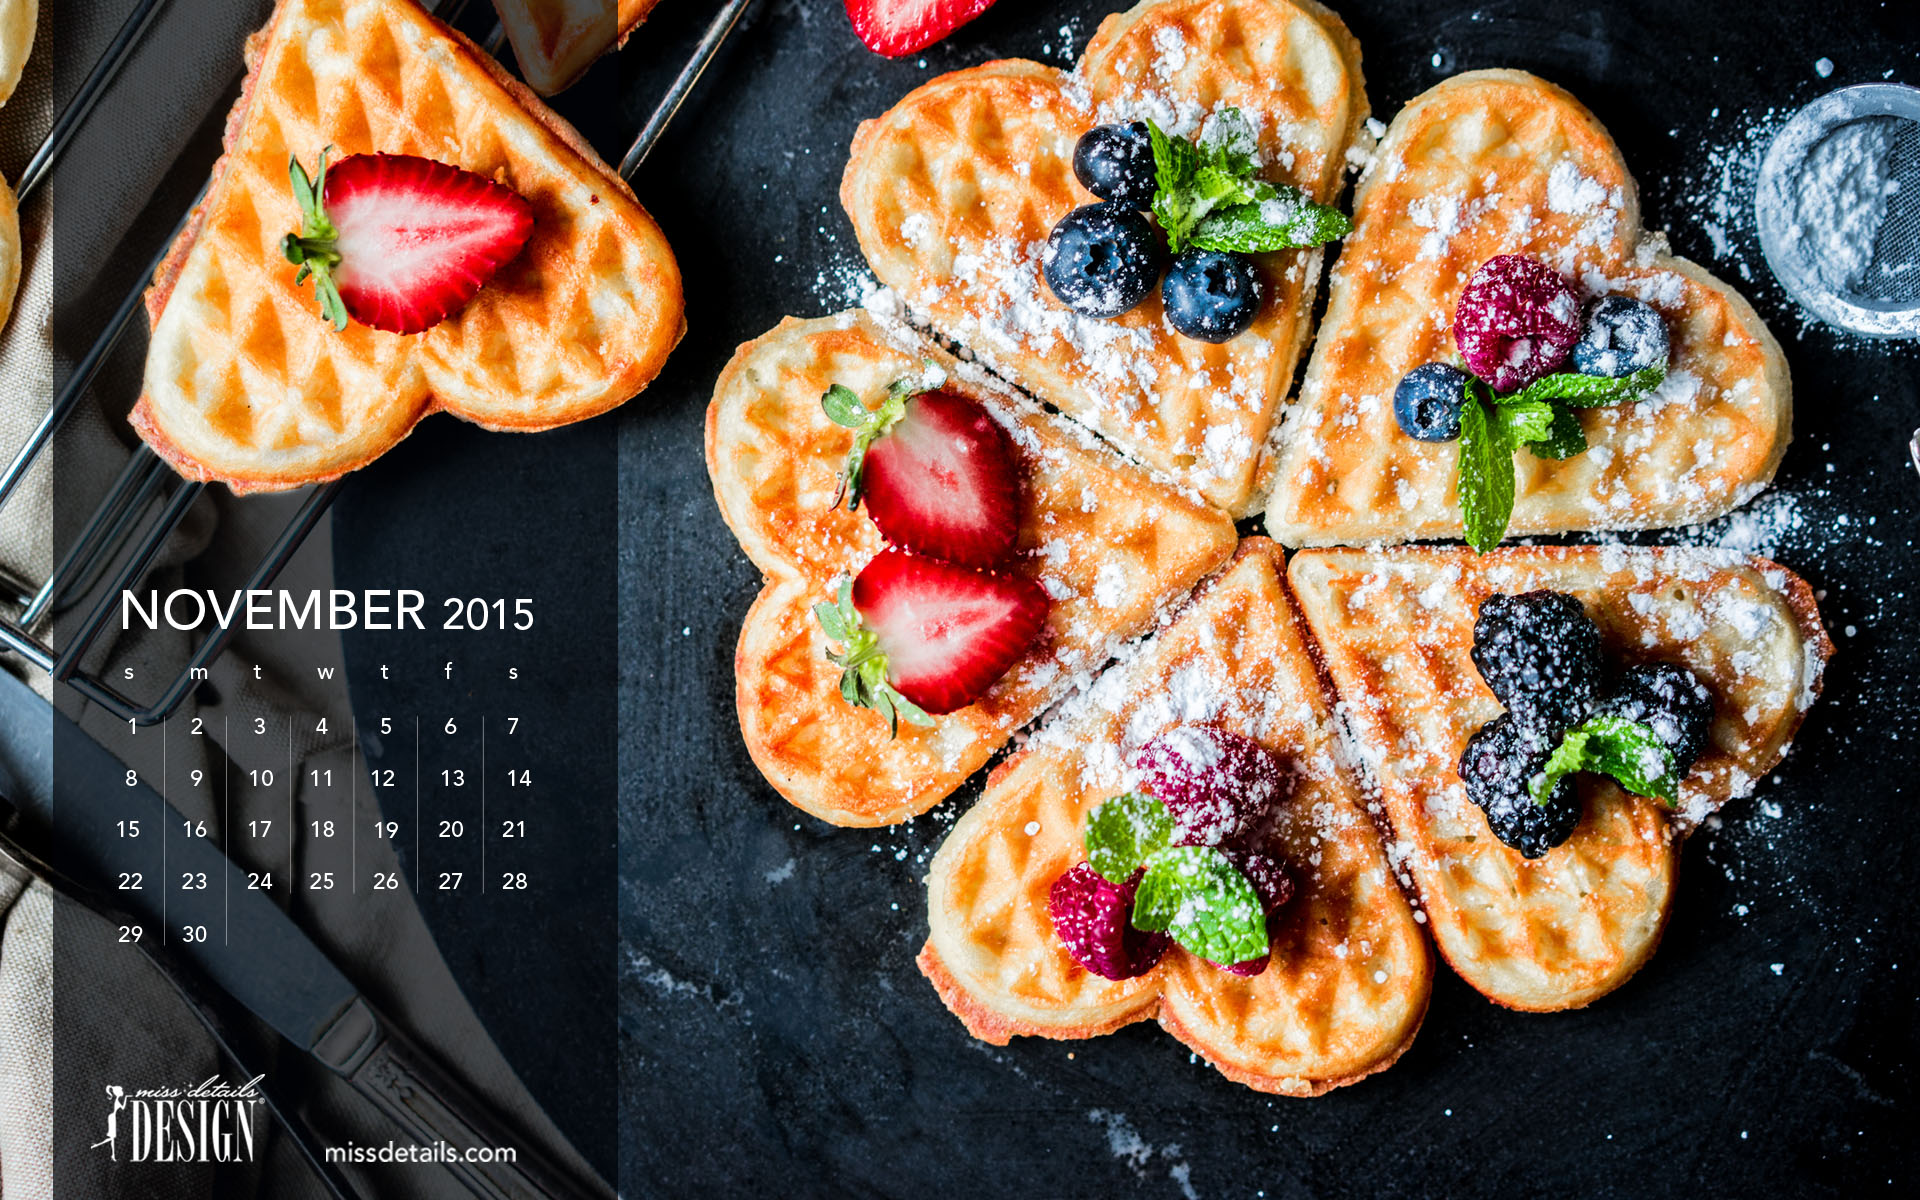 Free inspiring November 2015 desktop calendar from missdetails.com - #waffles